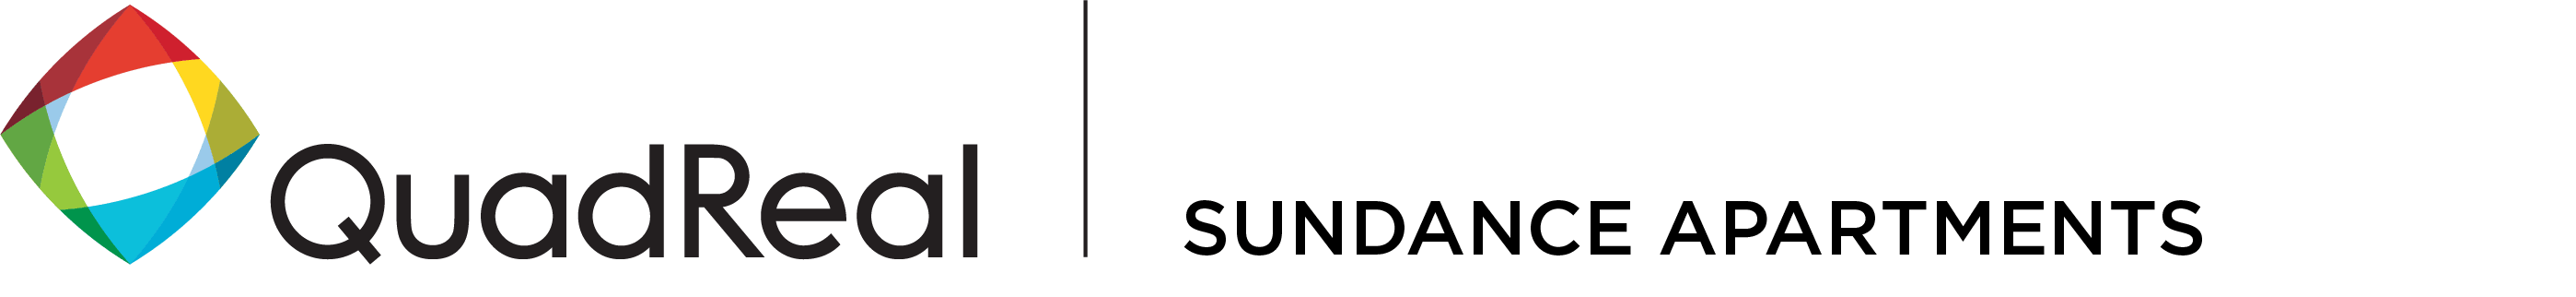 Sundance Apartments logo